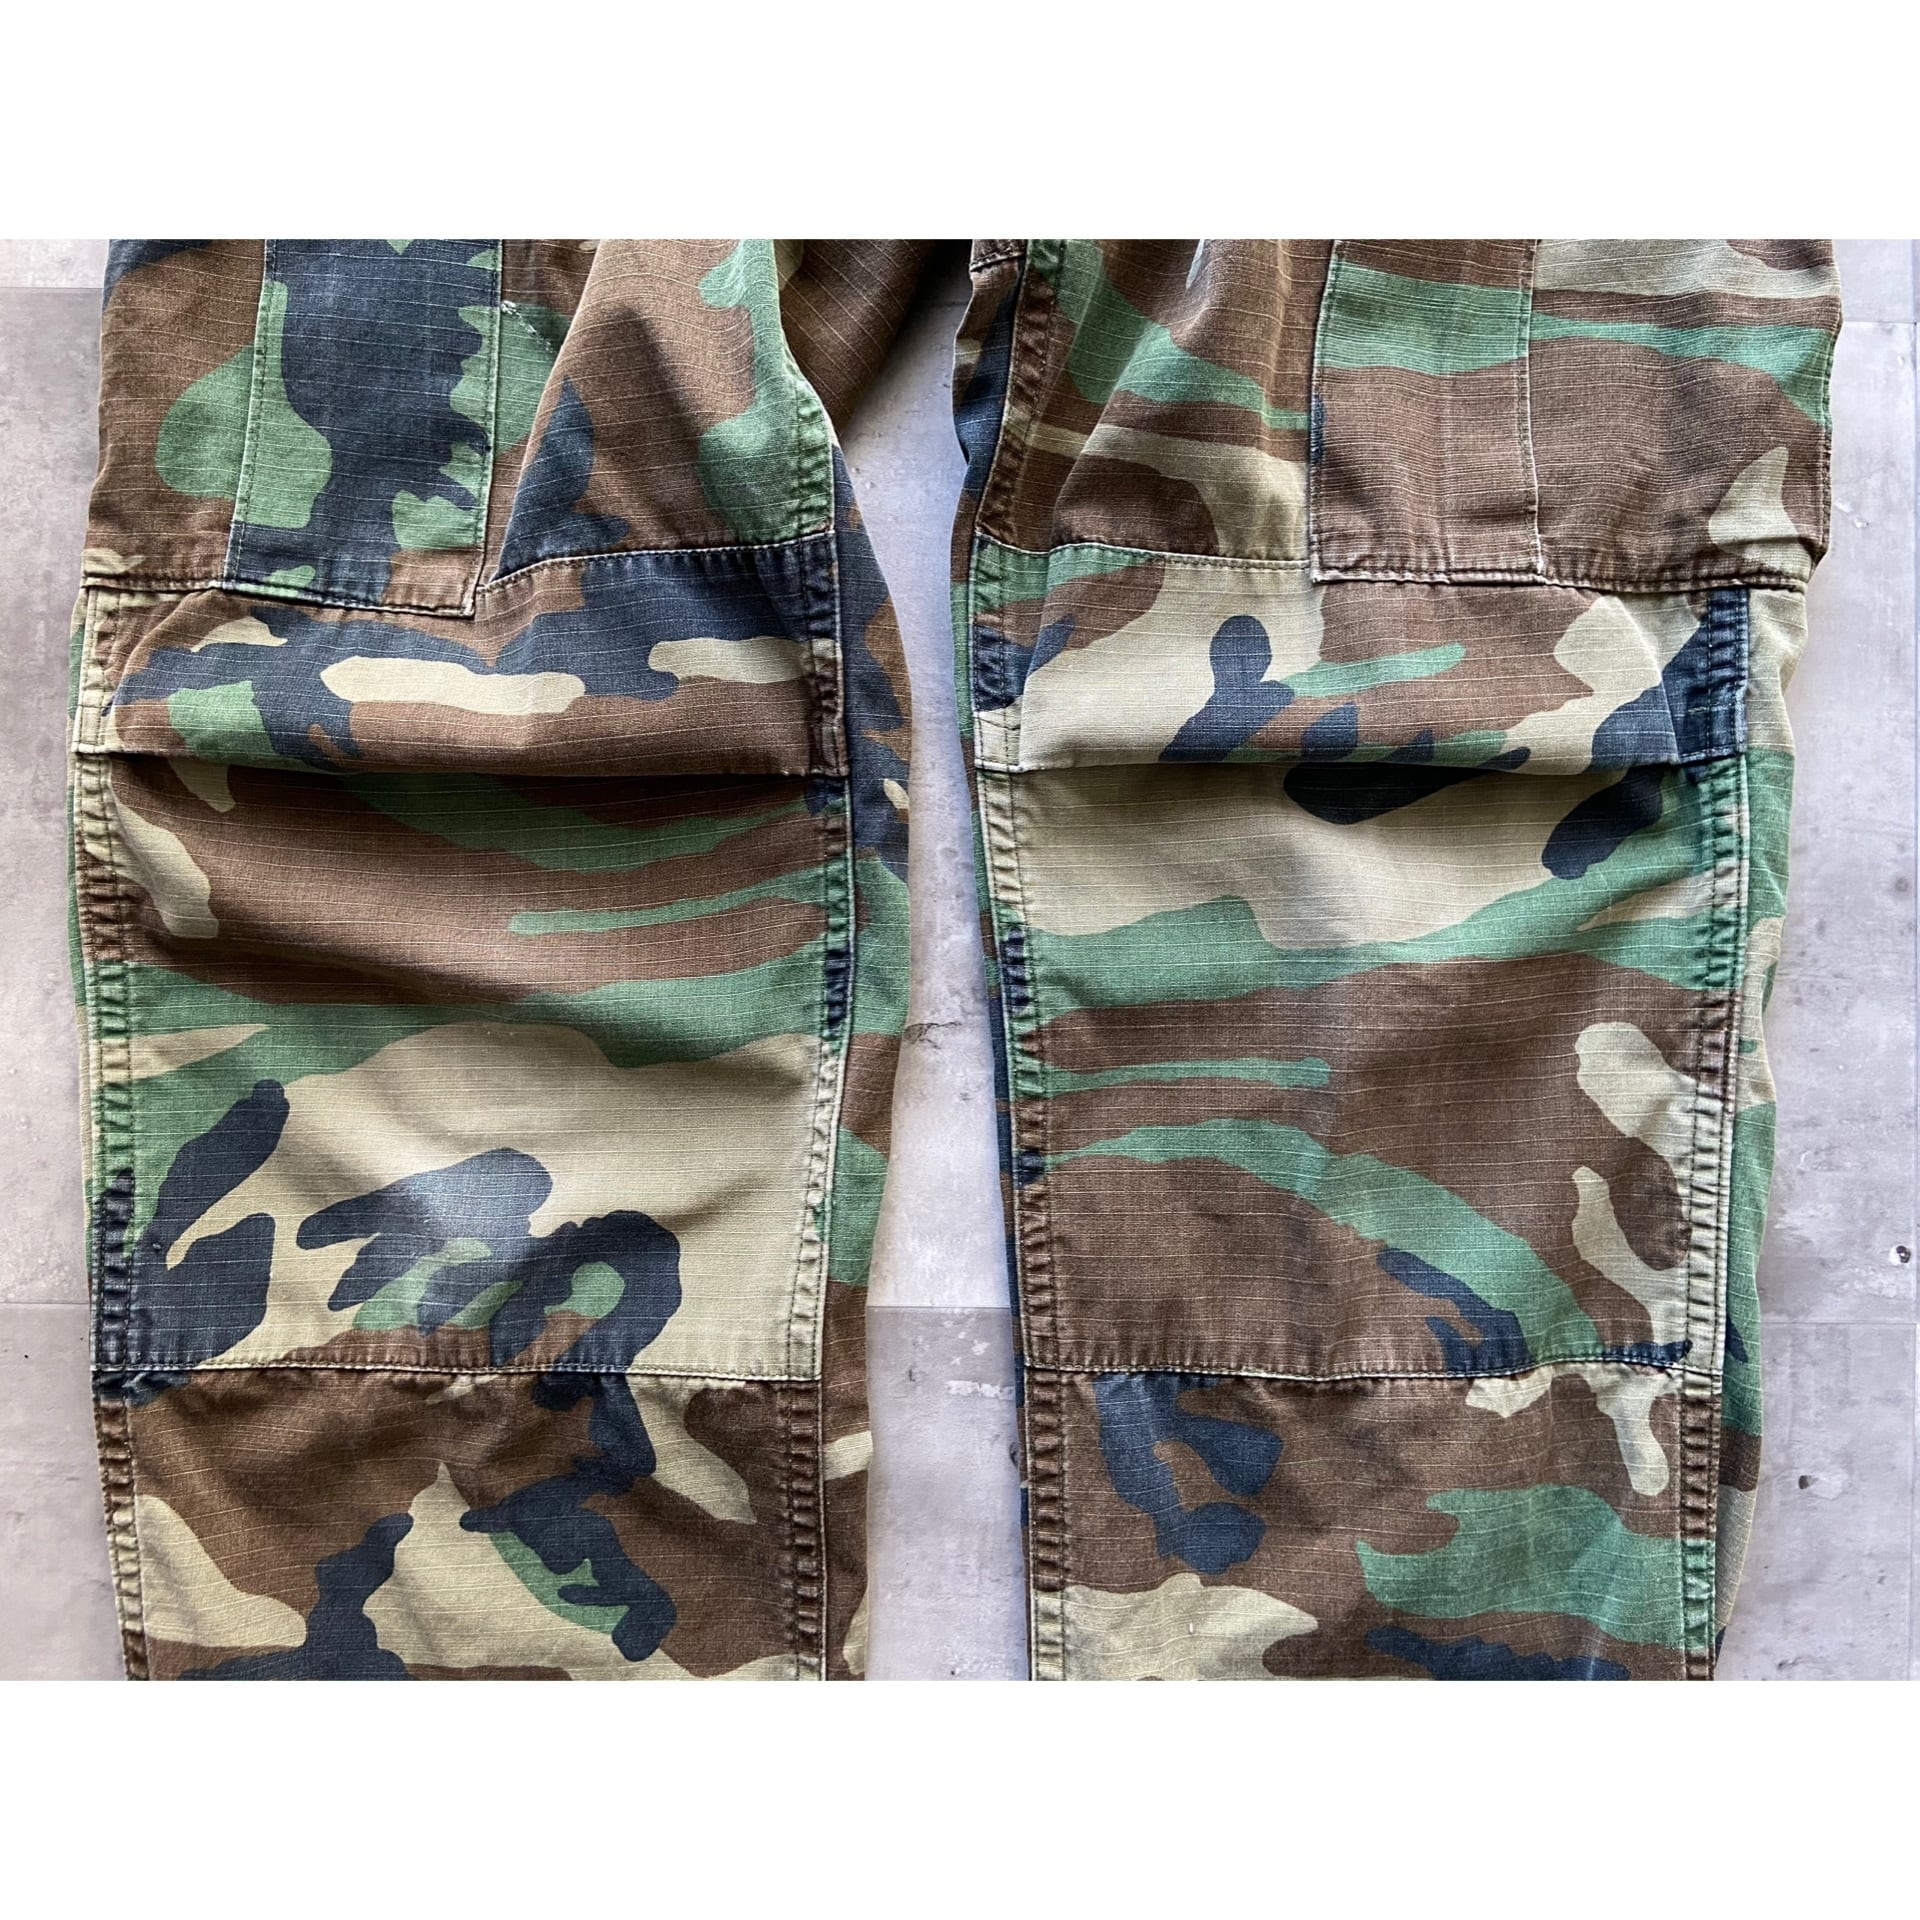 80s woodland camouflage pattern combat trousers “BDU” 米軍 コンバットパンツ ウッドランドカモ